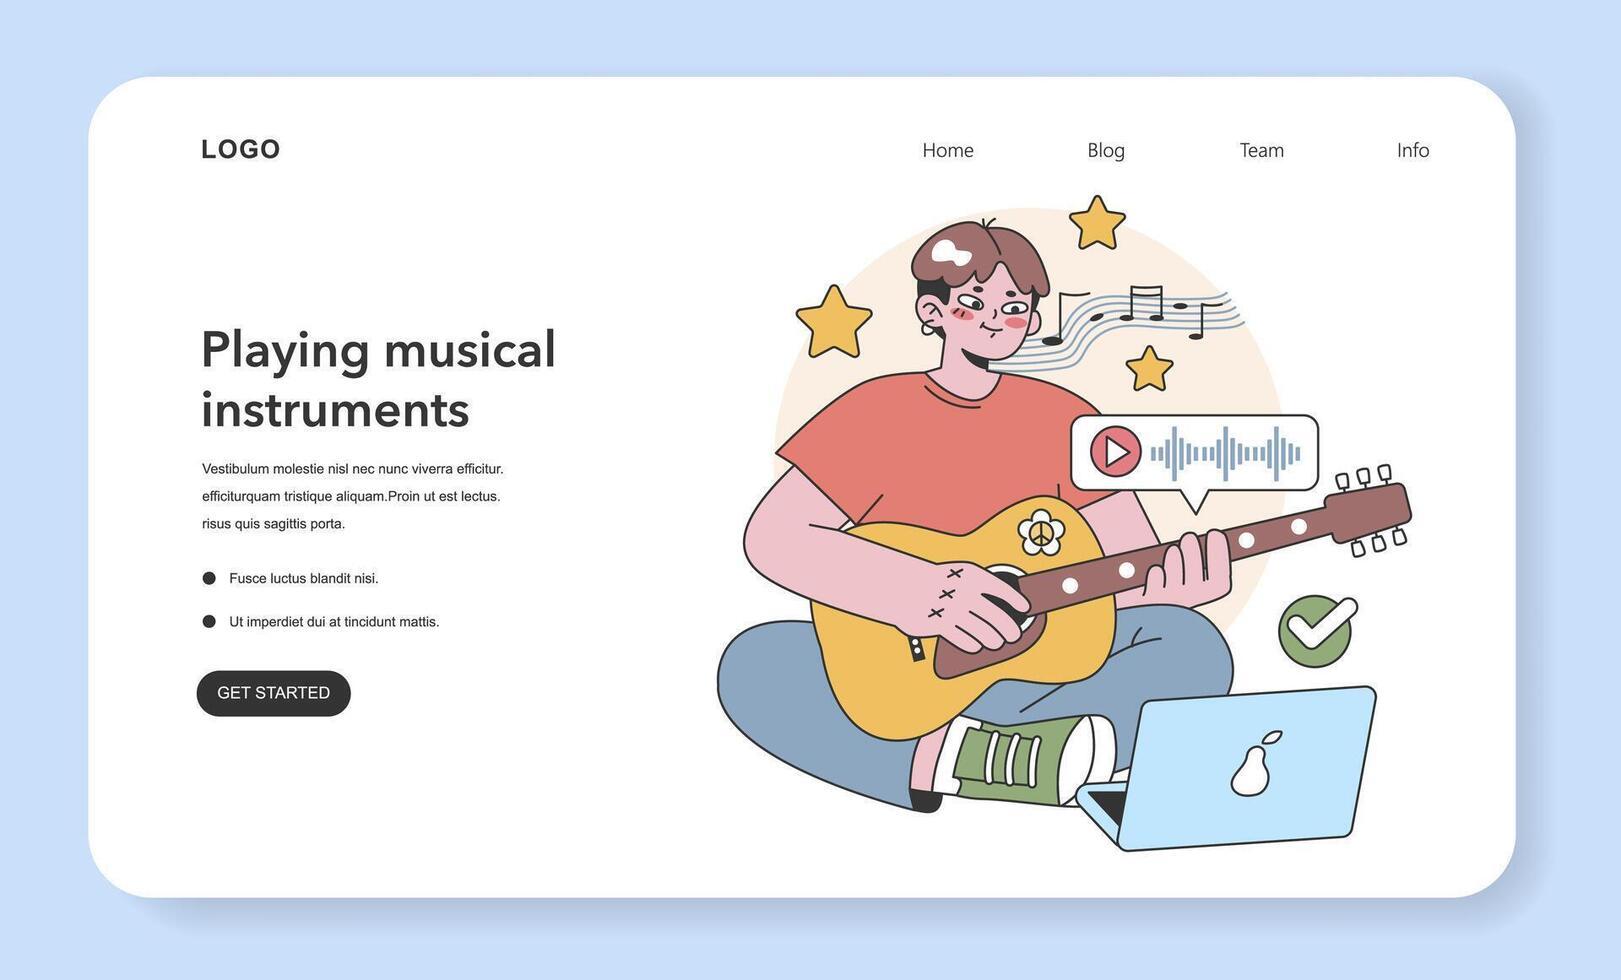 A joyful portrayal of learning music. Flat vector illustration